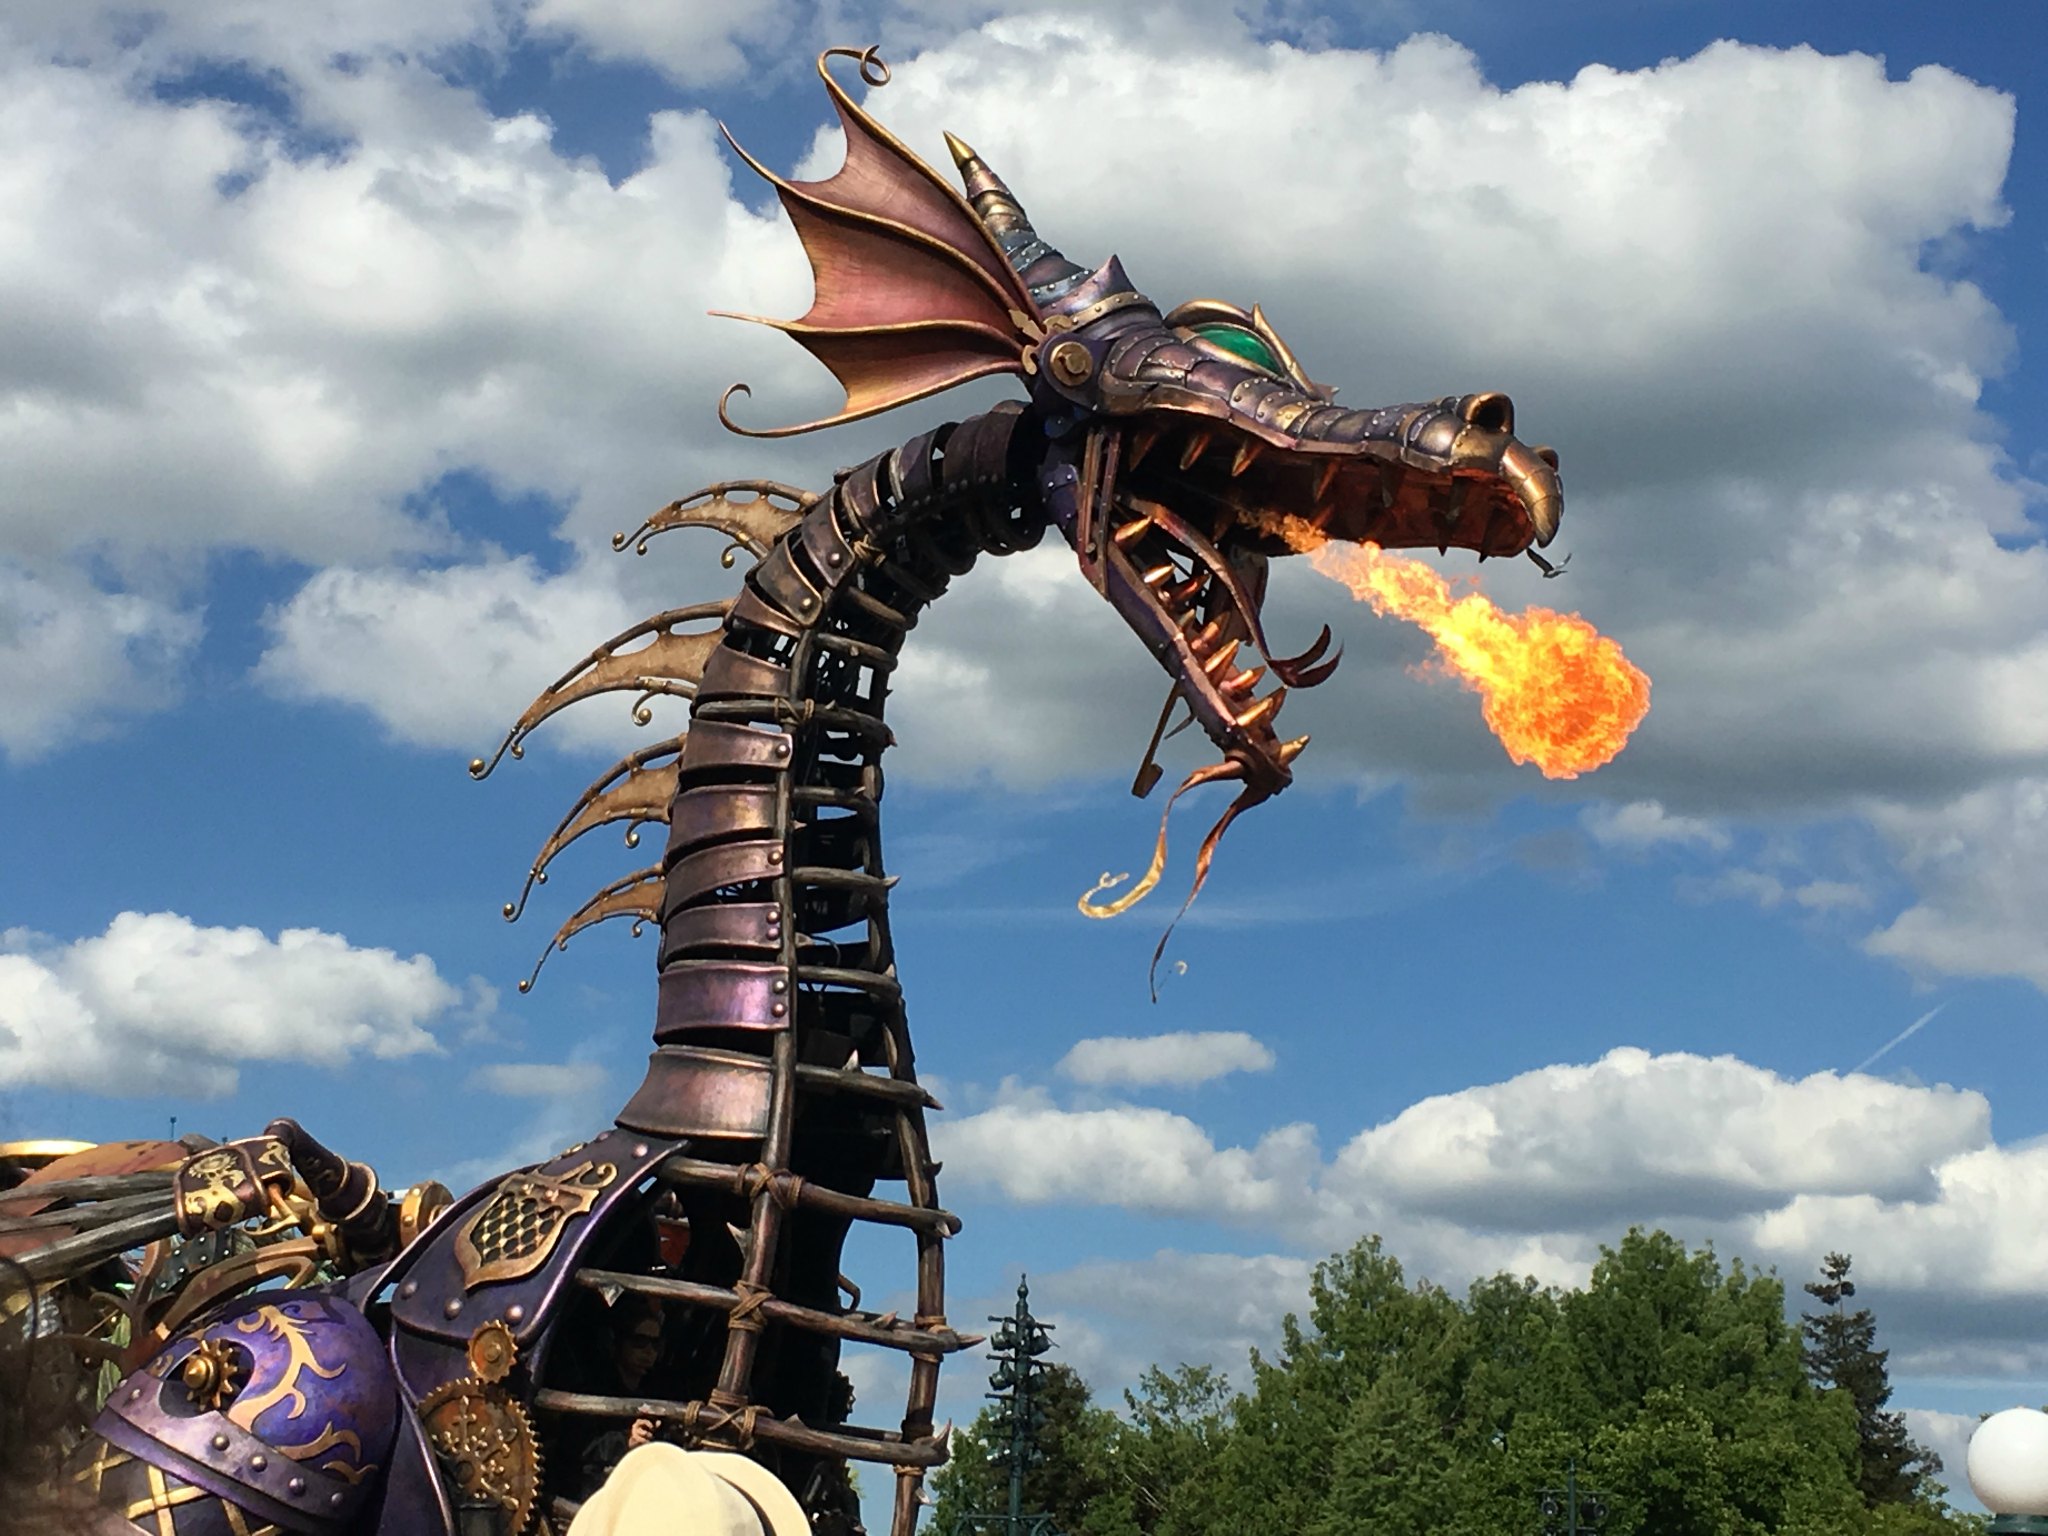 Disney parade dragon 